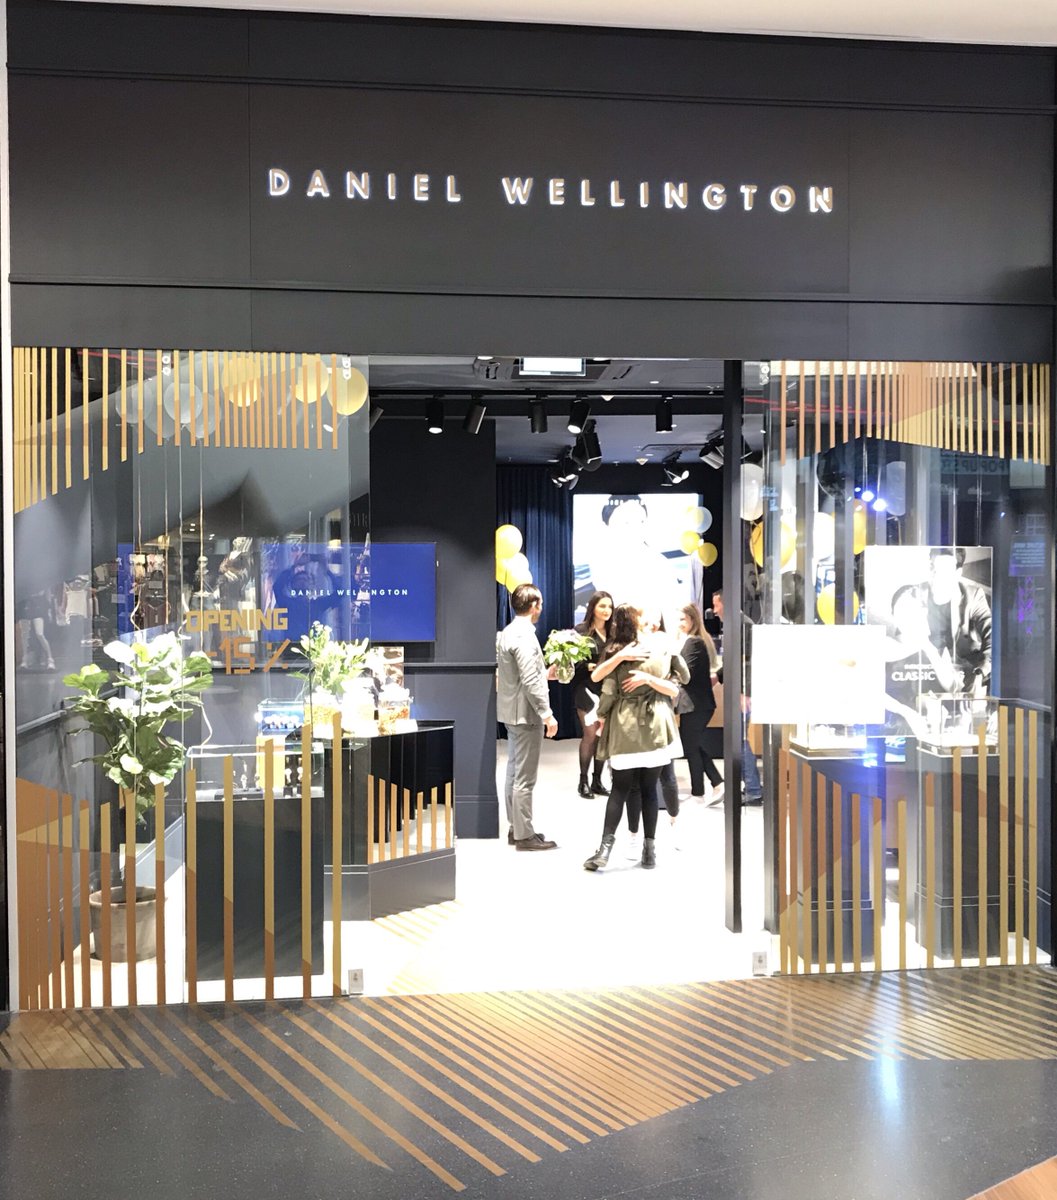 تويتر \ Daniel Wellington تويتر: "On May 15th, our store Frankfurt in Germany opened its doors MyZeil shopping mall. You can us at Zeil 106! Come visit us